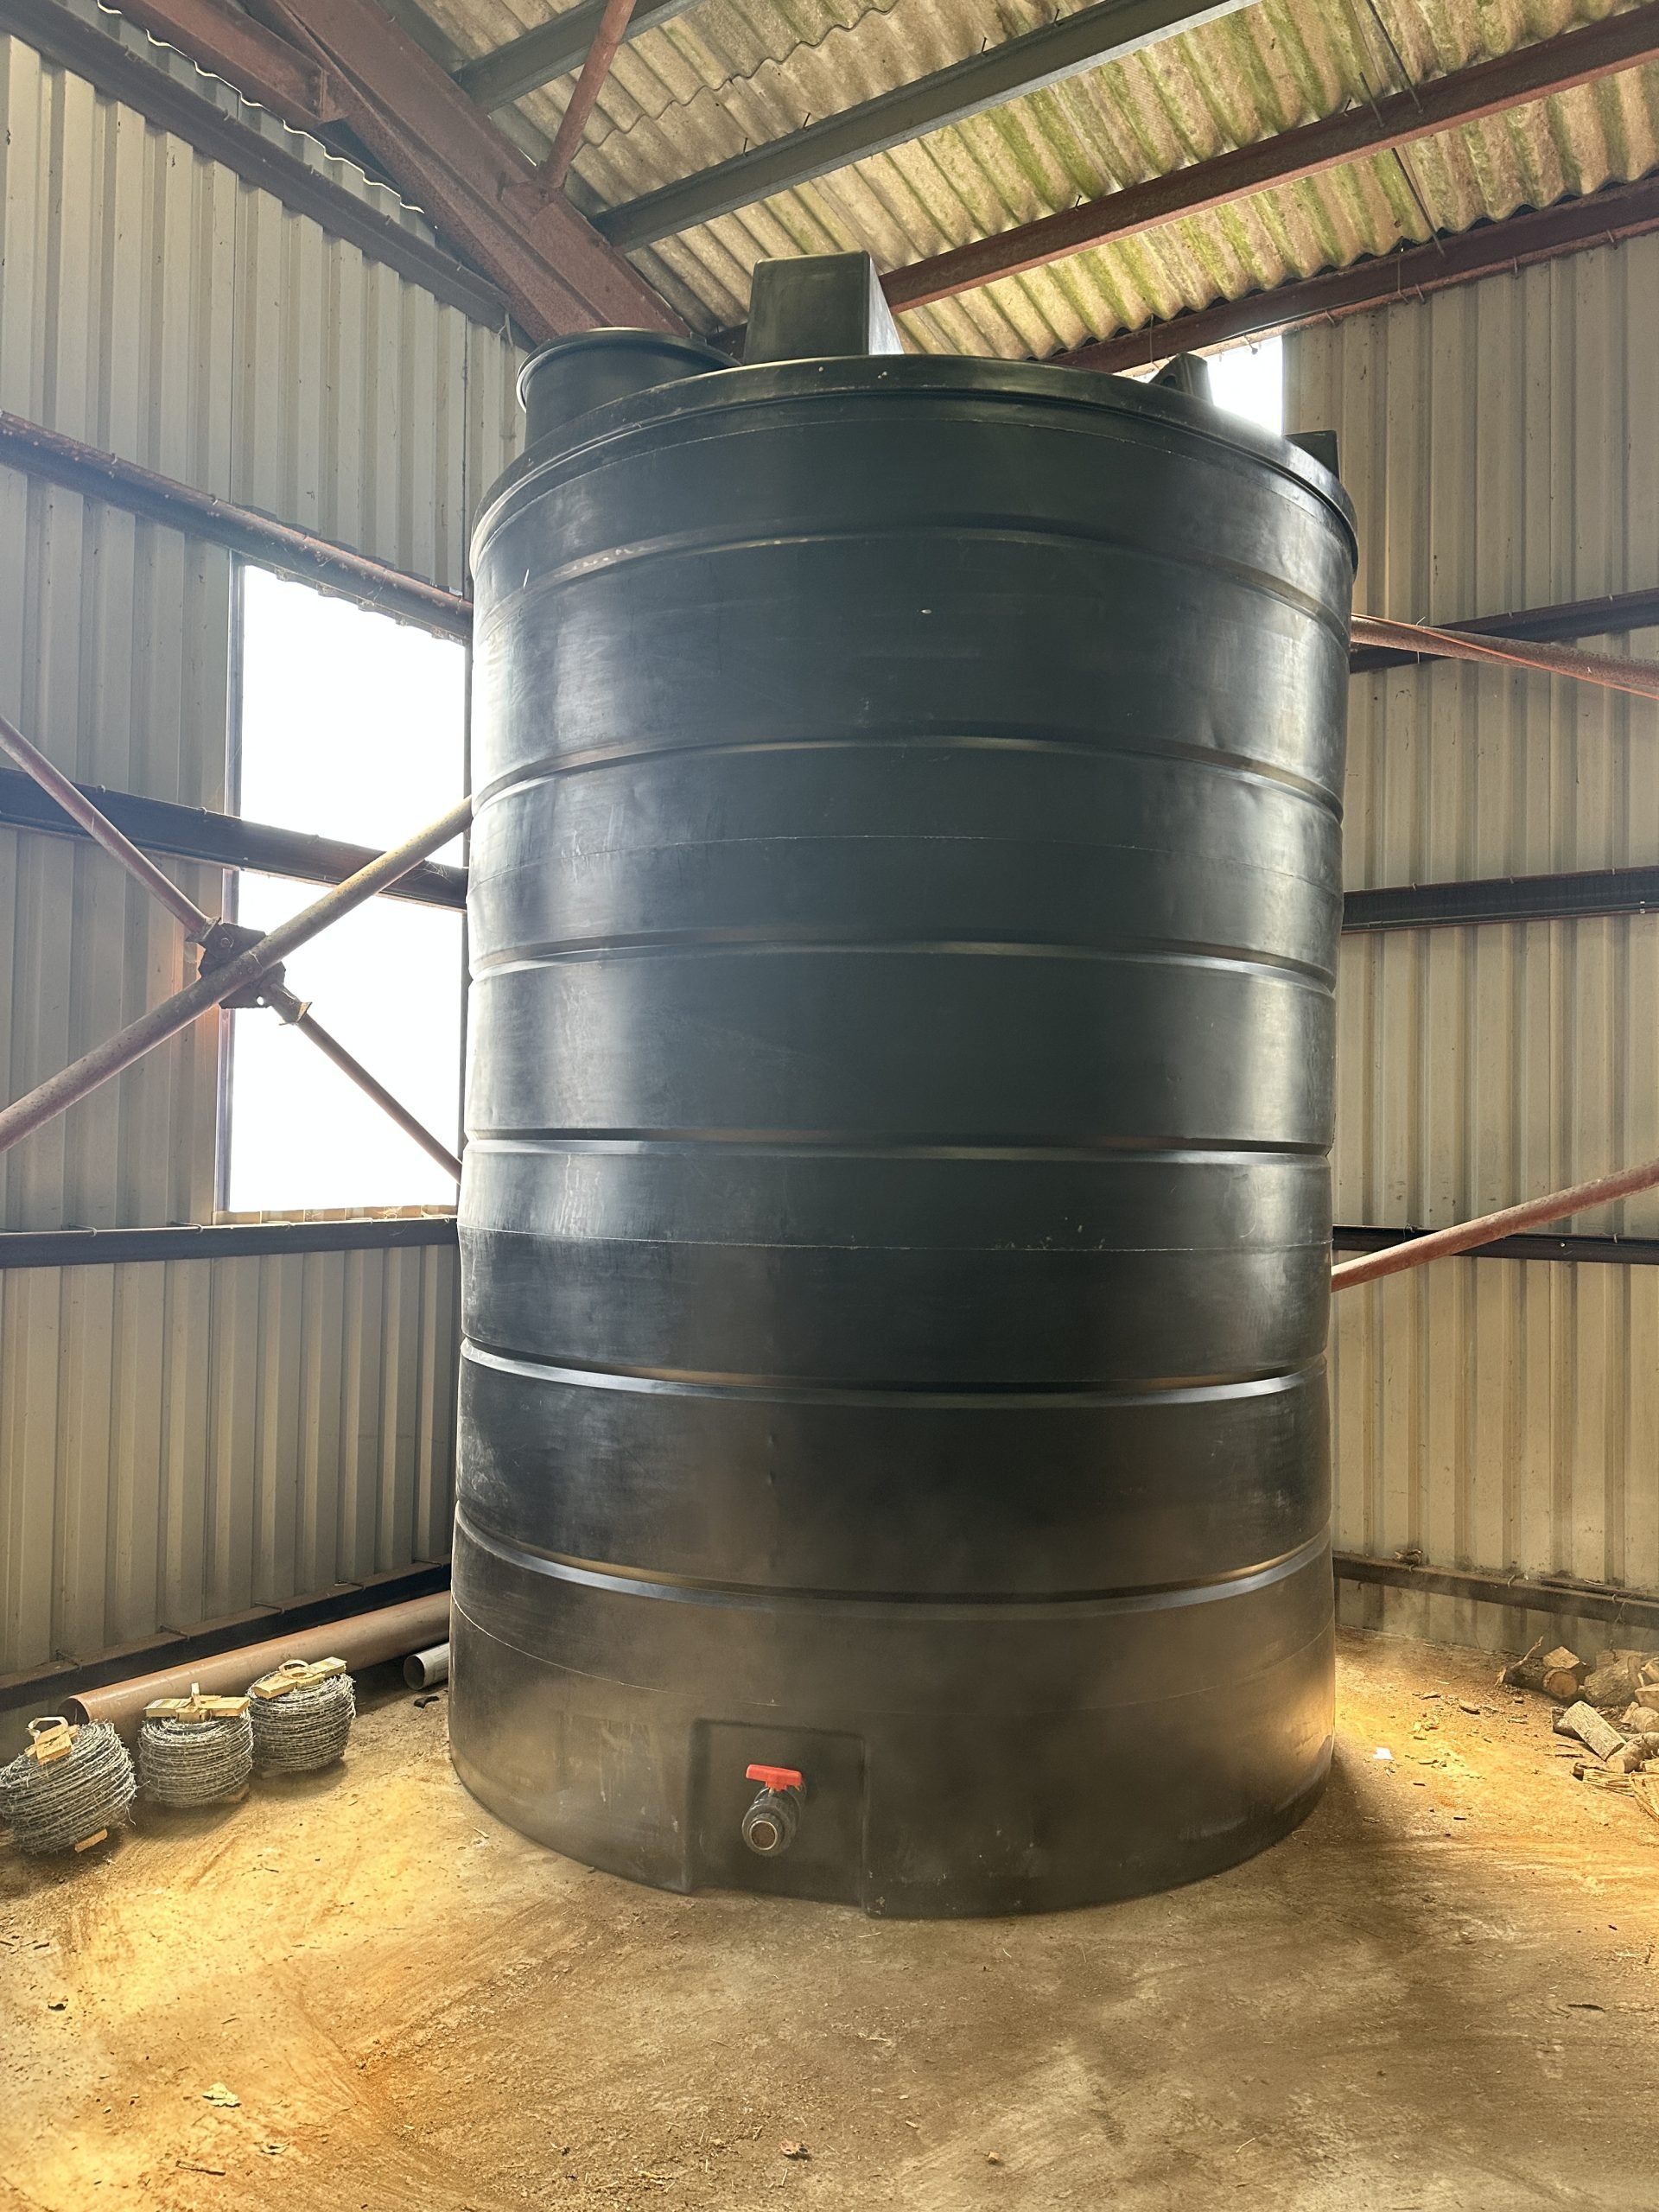 rainwater harvesting tank stored in barn